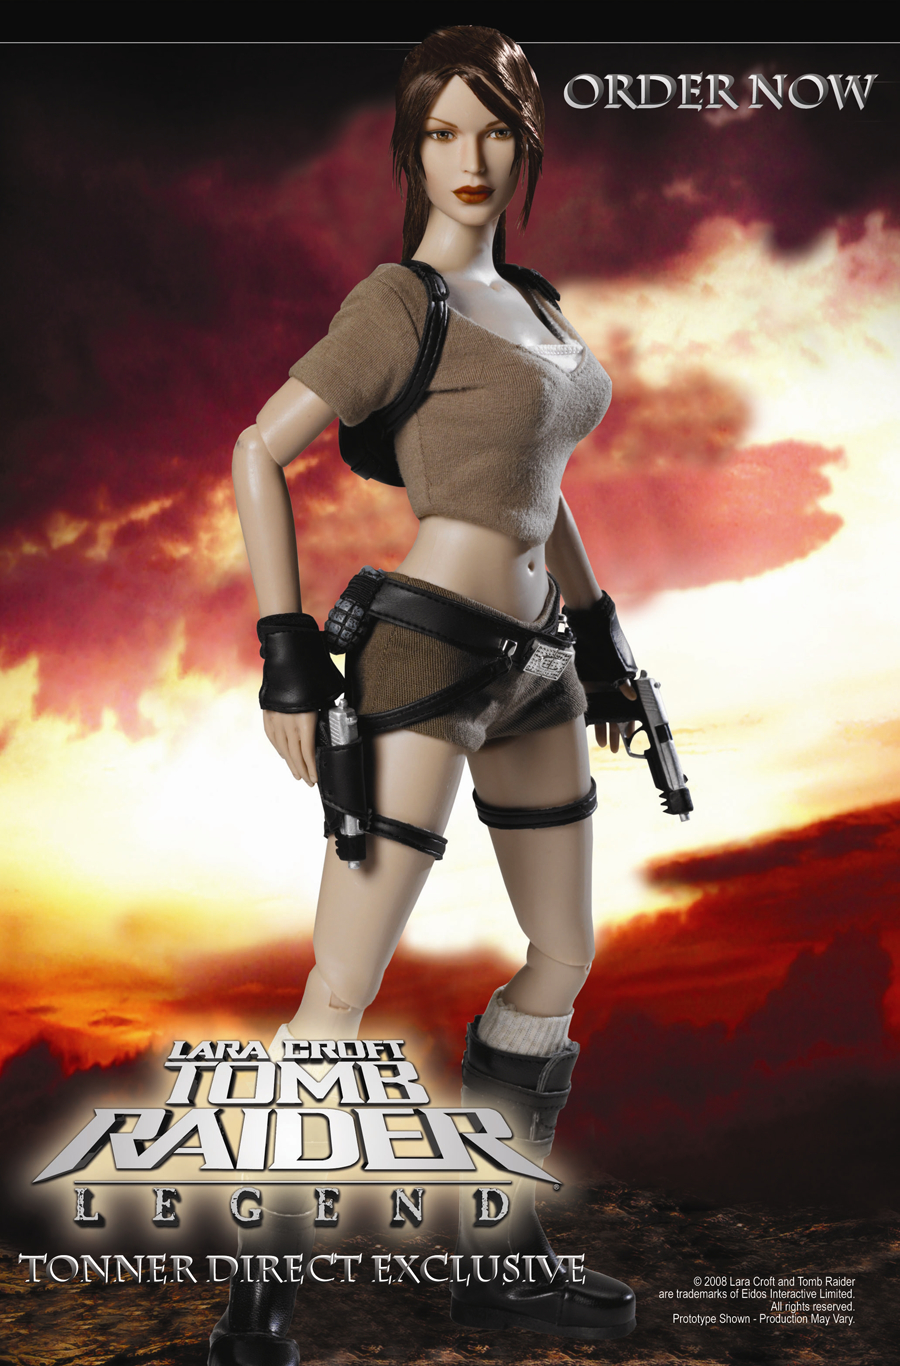 Tomb Raider: The Legend of Lara Croft, First Look